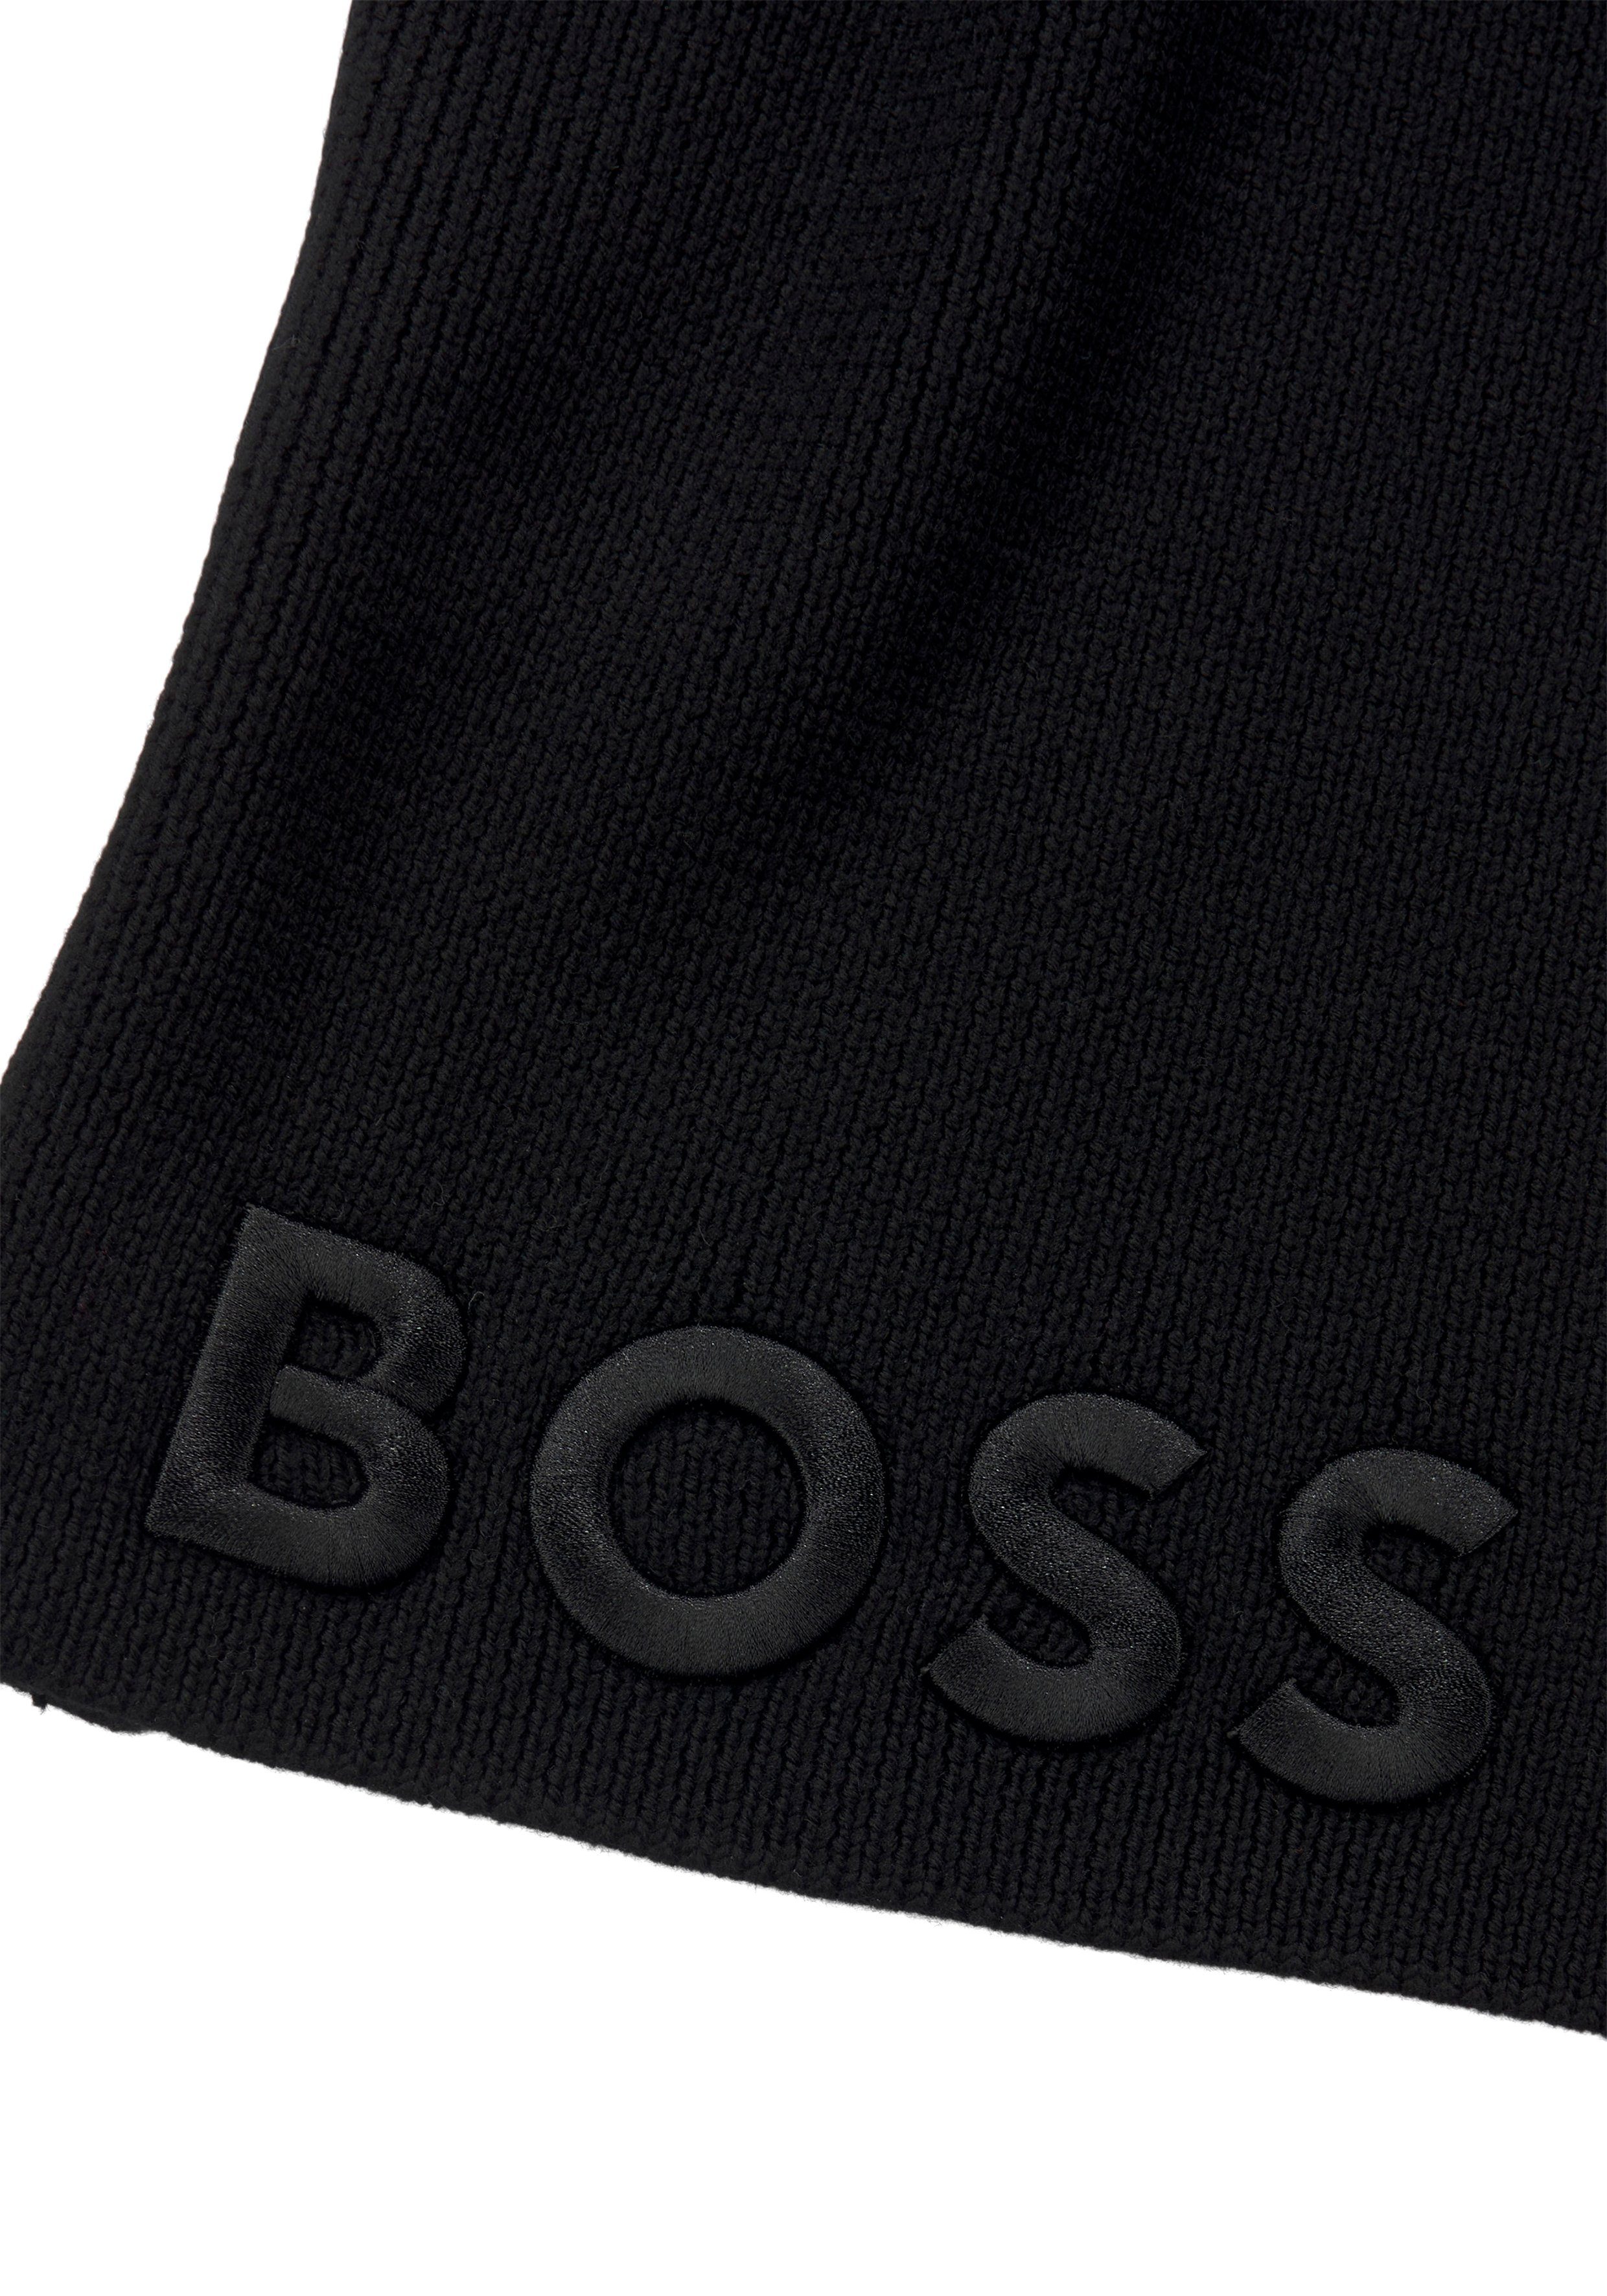 BOSS Schal Lara_scarf, Black tonaler mit BOSS Logo-Stickerei